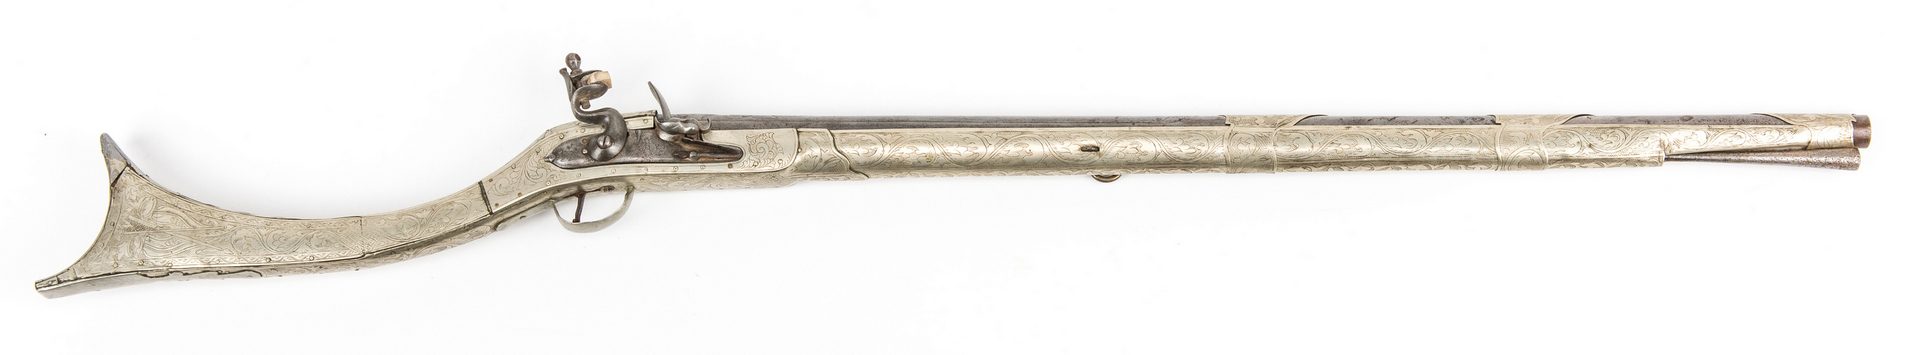 Lot 780: Turkish Flintlock Musketoon, .72 cal, with Dagger